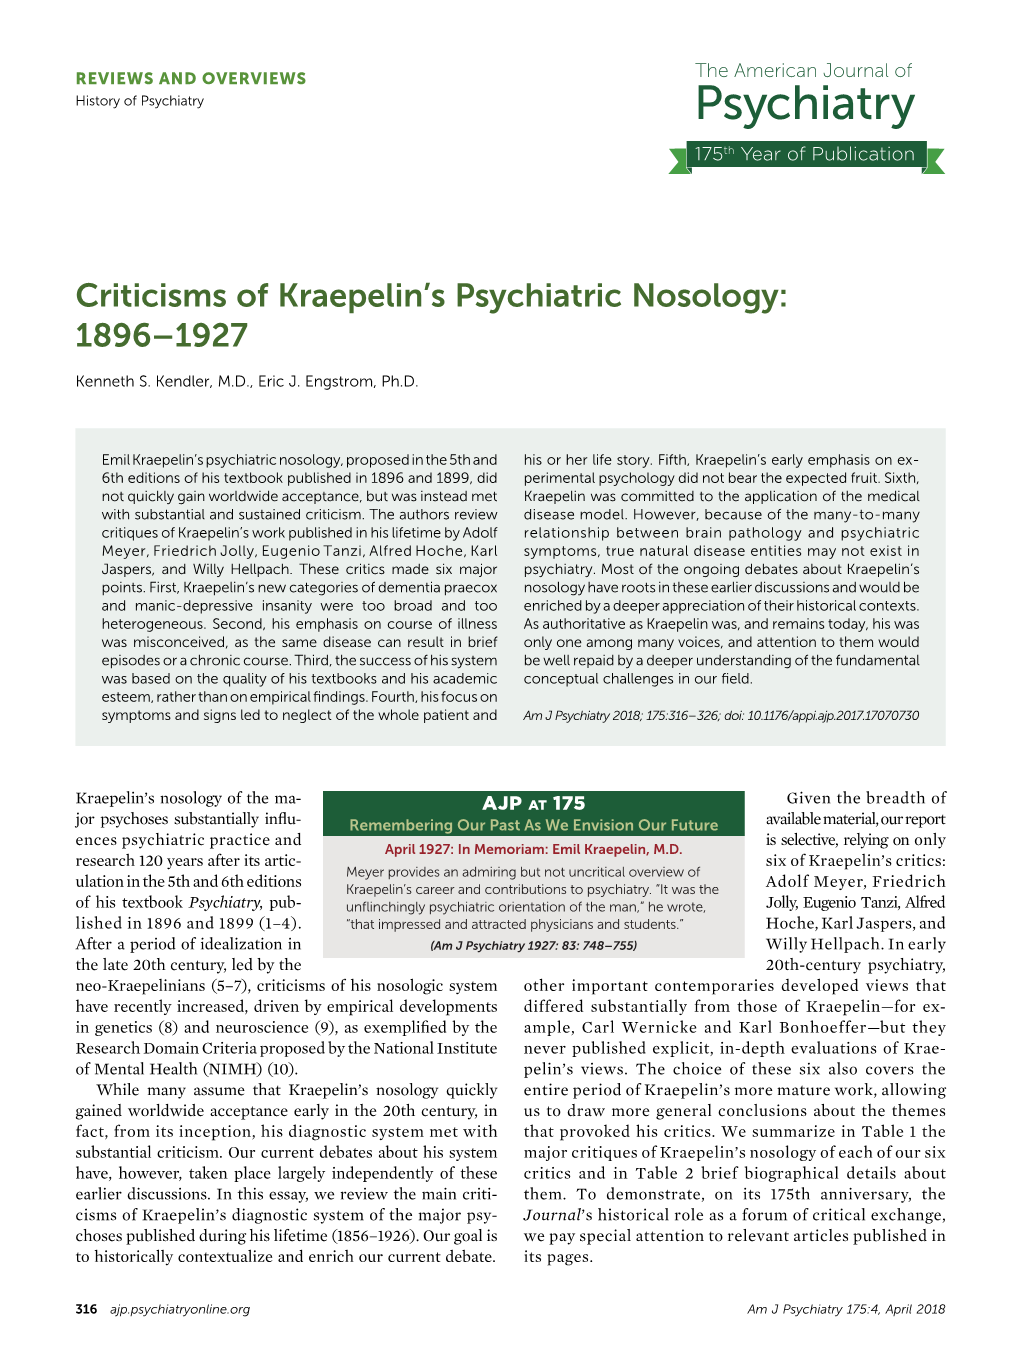 Criticisms of Kraepelin's Psychiatric Nosology